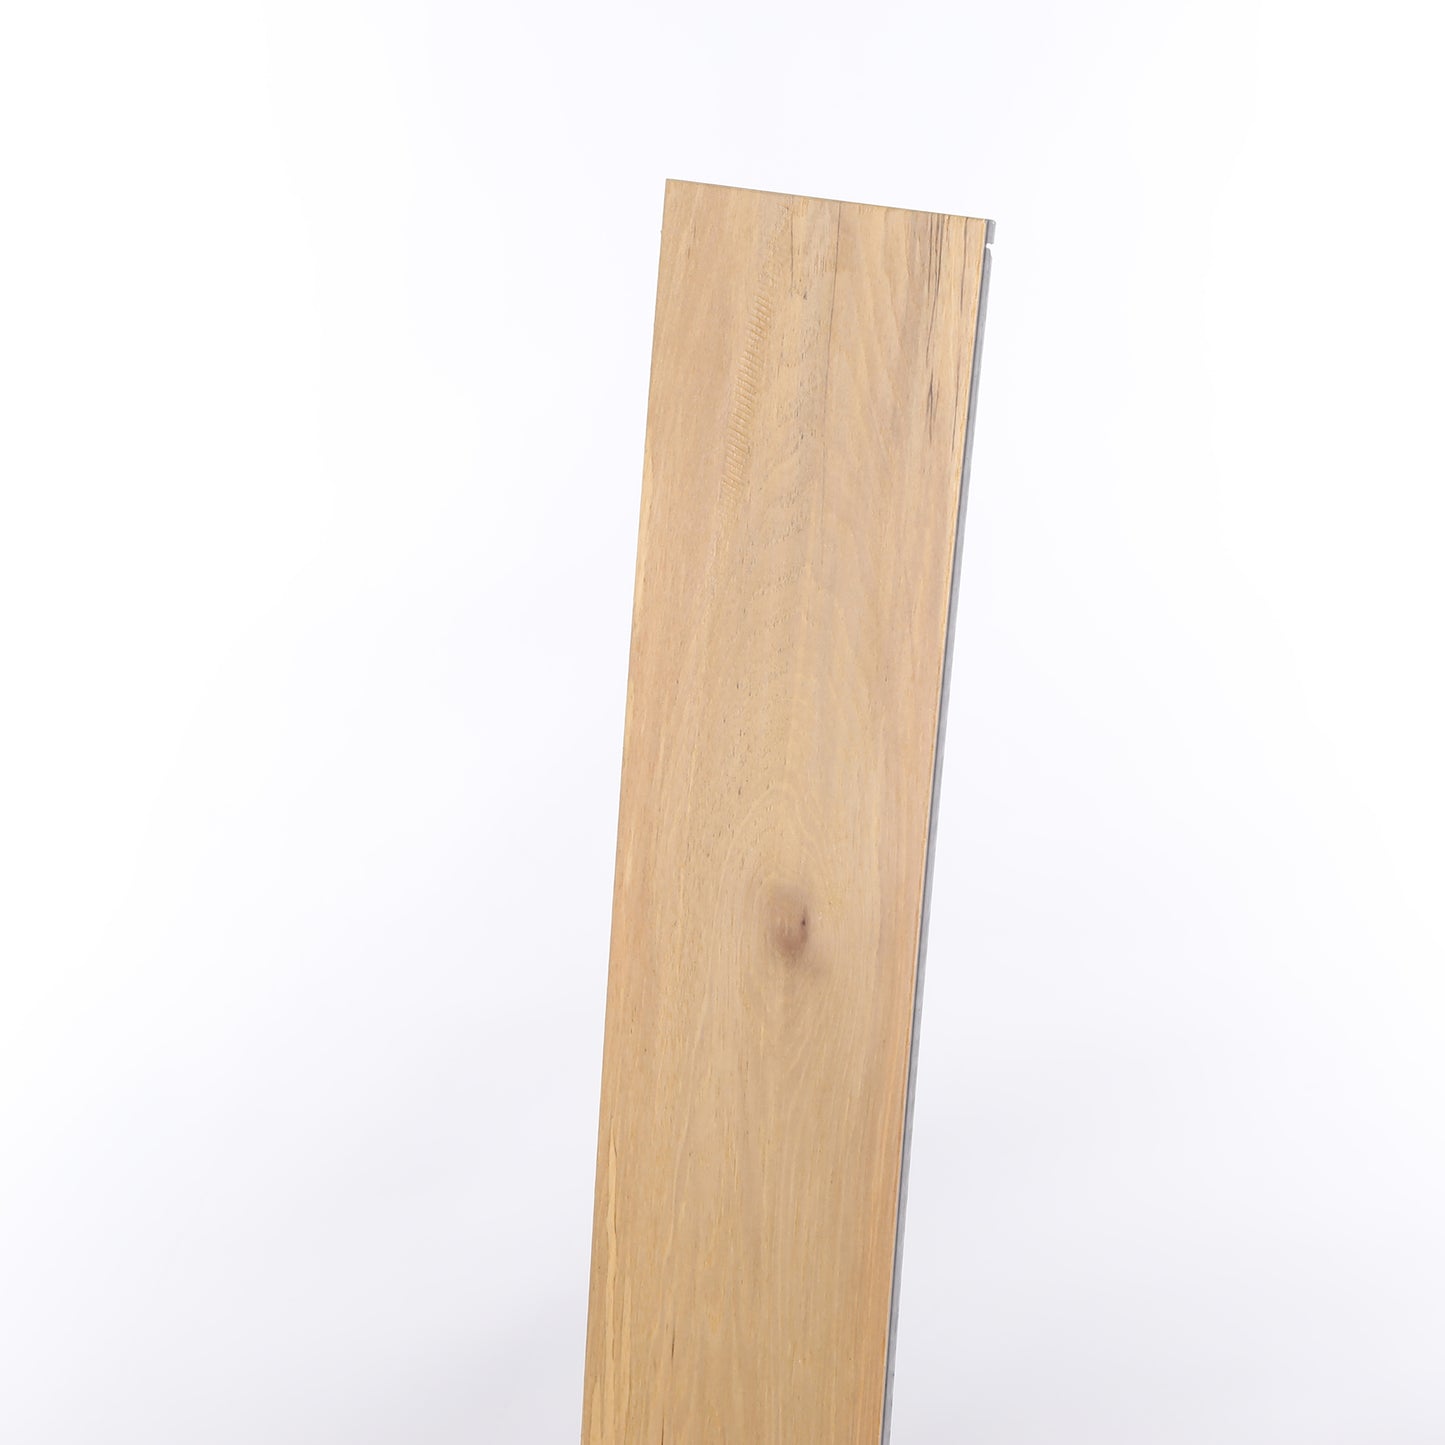 7mm Natural Hickory Waterproof Engineered Hardwood Flooring 5 in. Wide x Varying Length Long